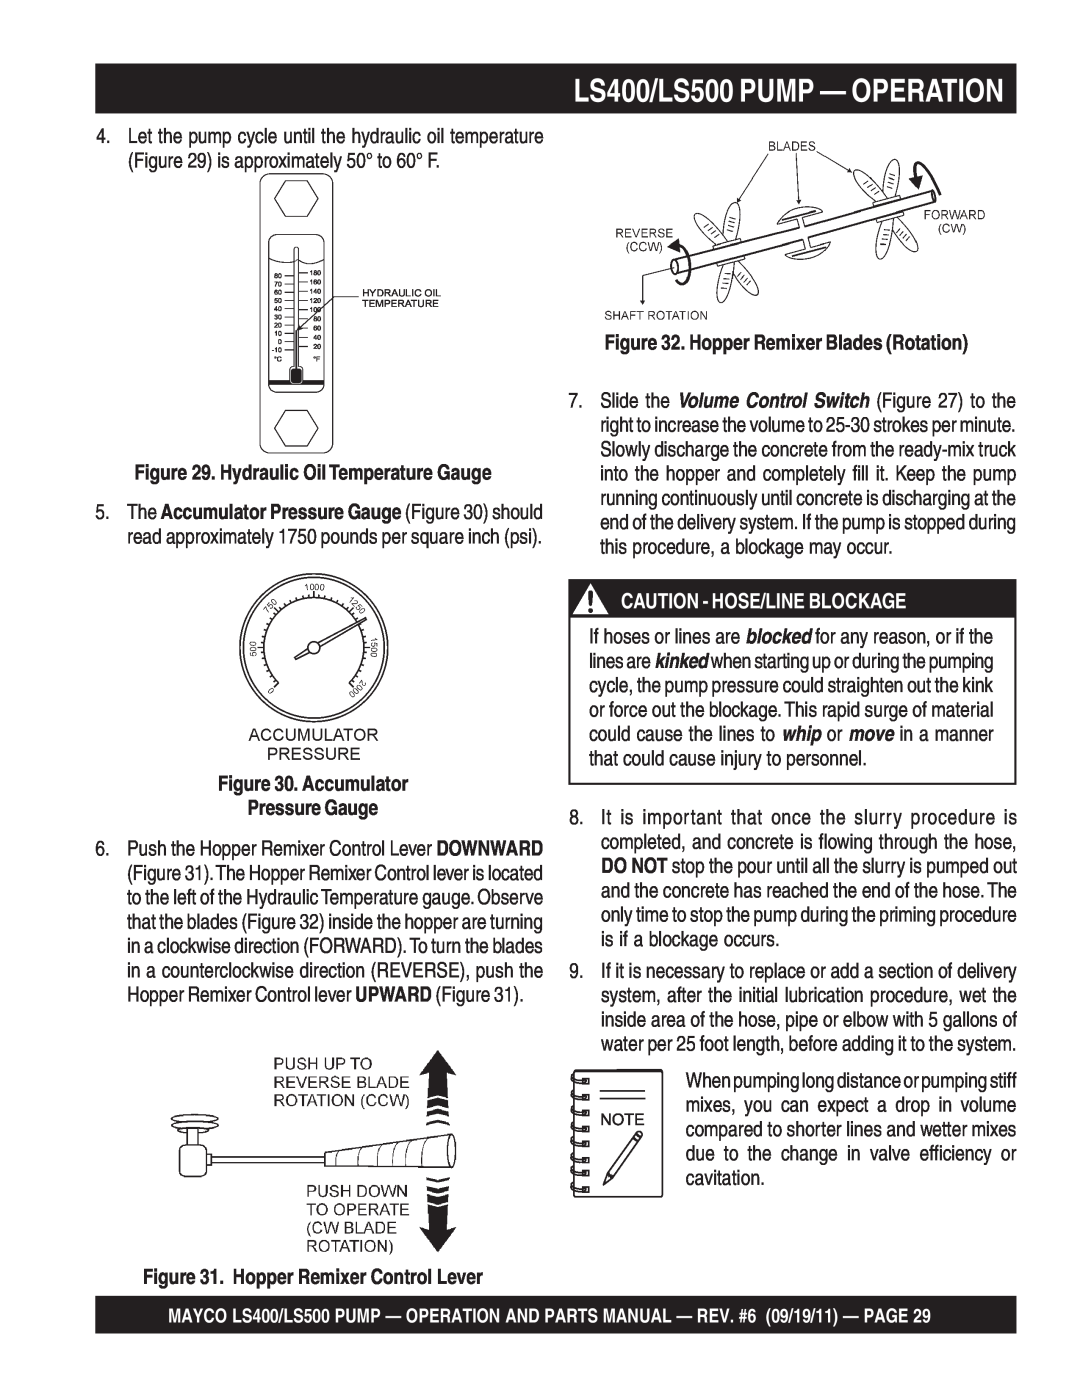 Multiquip LS500, LS400 manual Accumulator Pressure Gauge, Hopper Remixer Blades Rotation, Caution - Hose/Line Blockage 